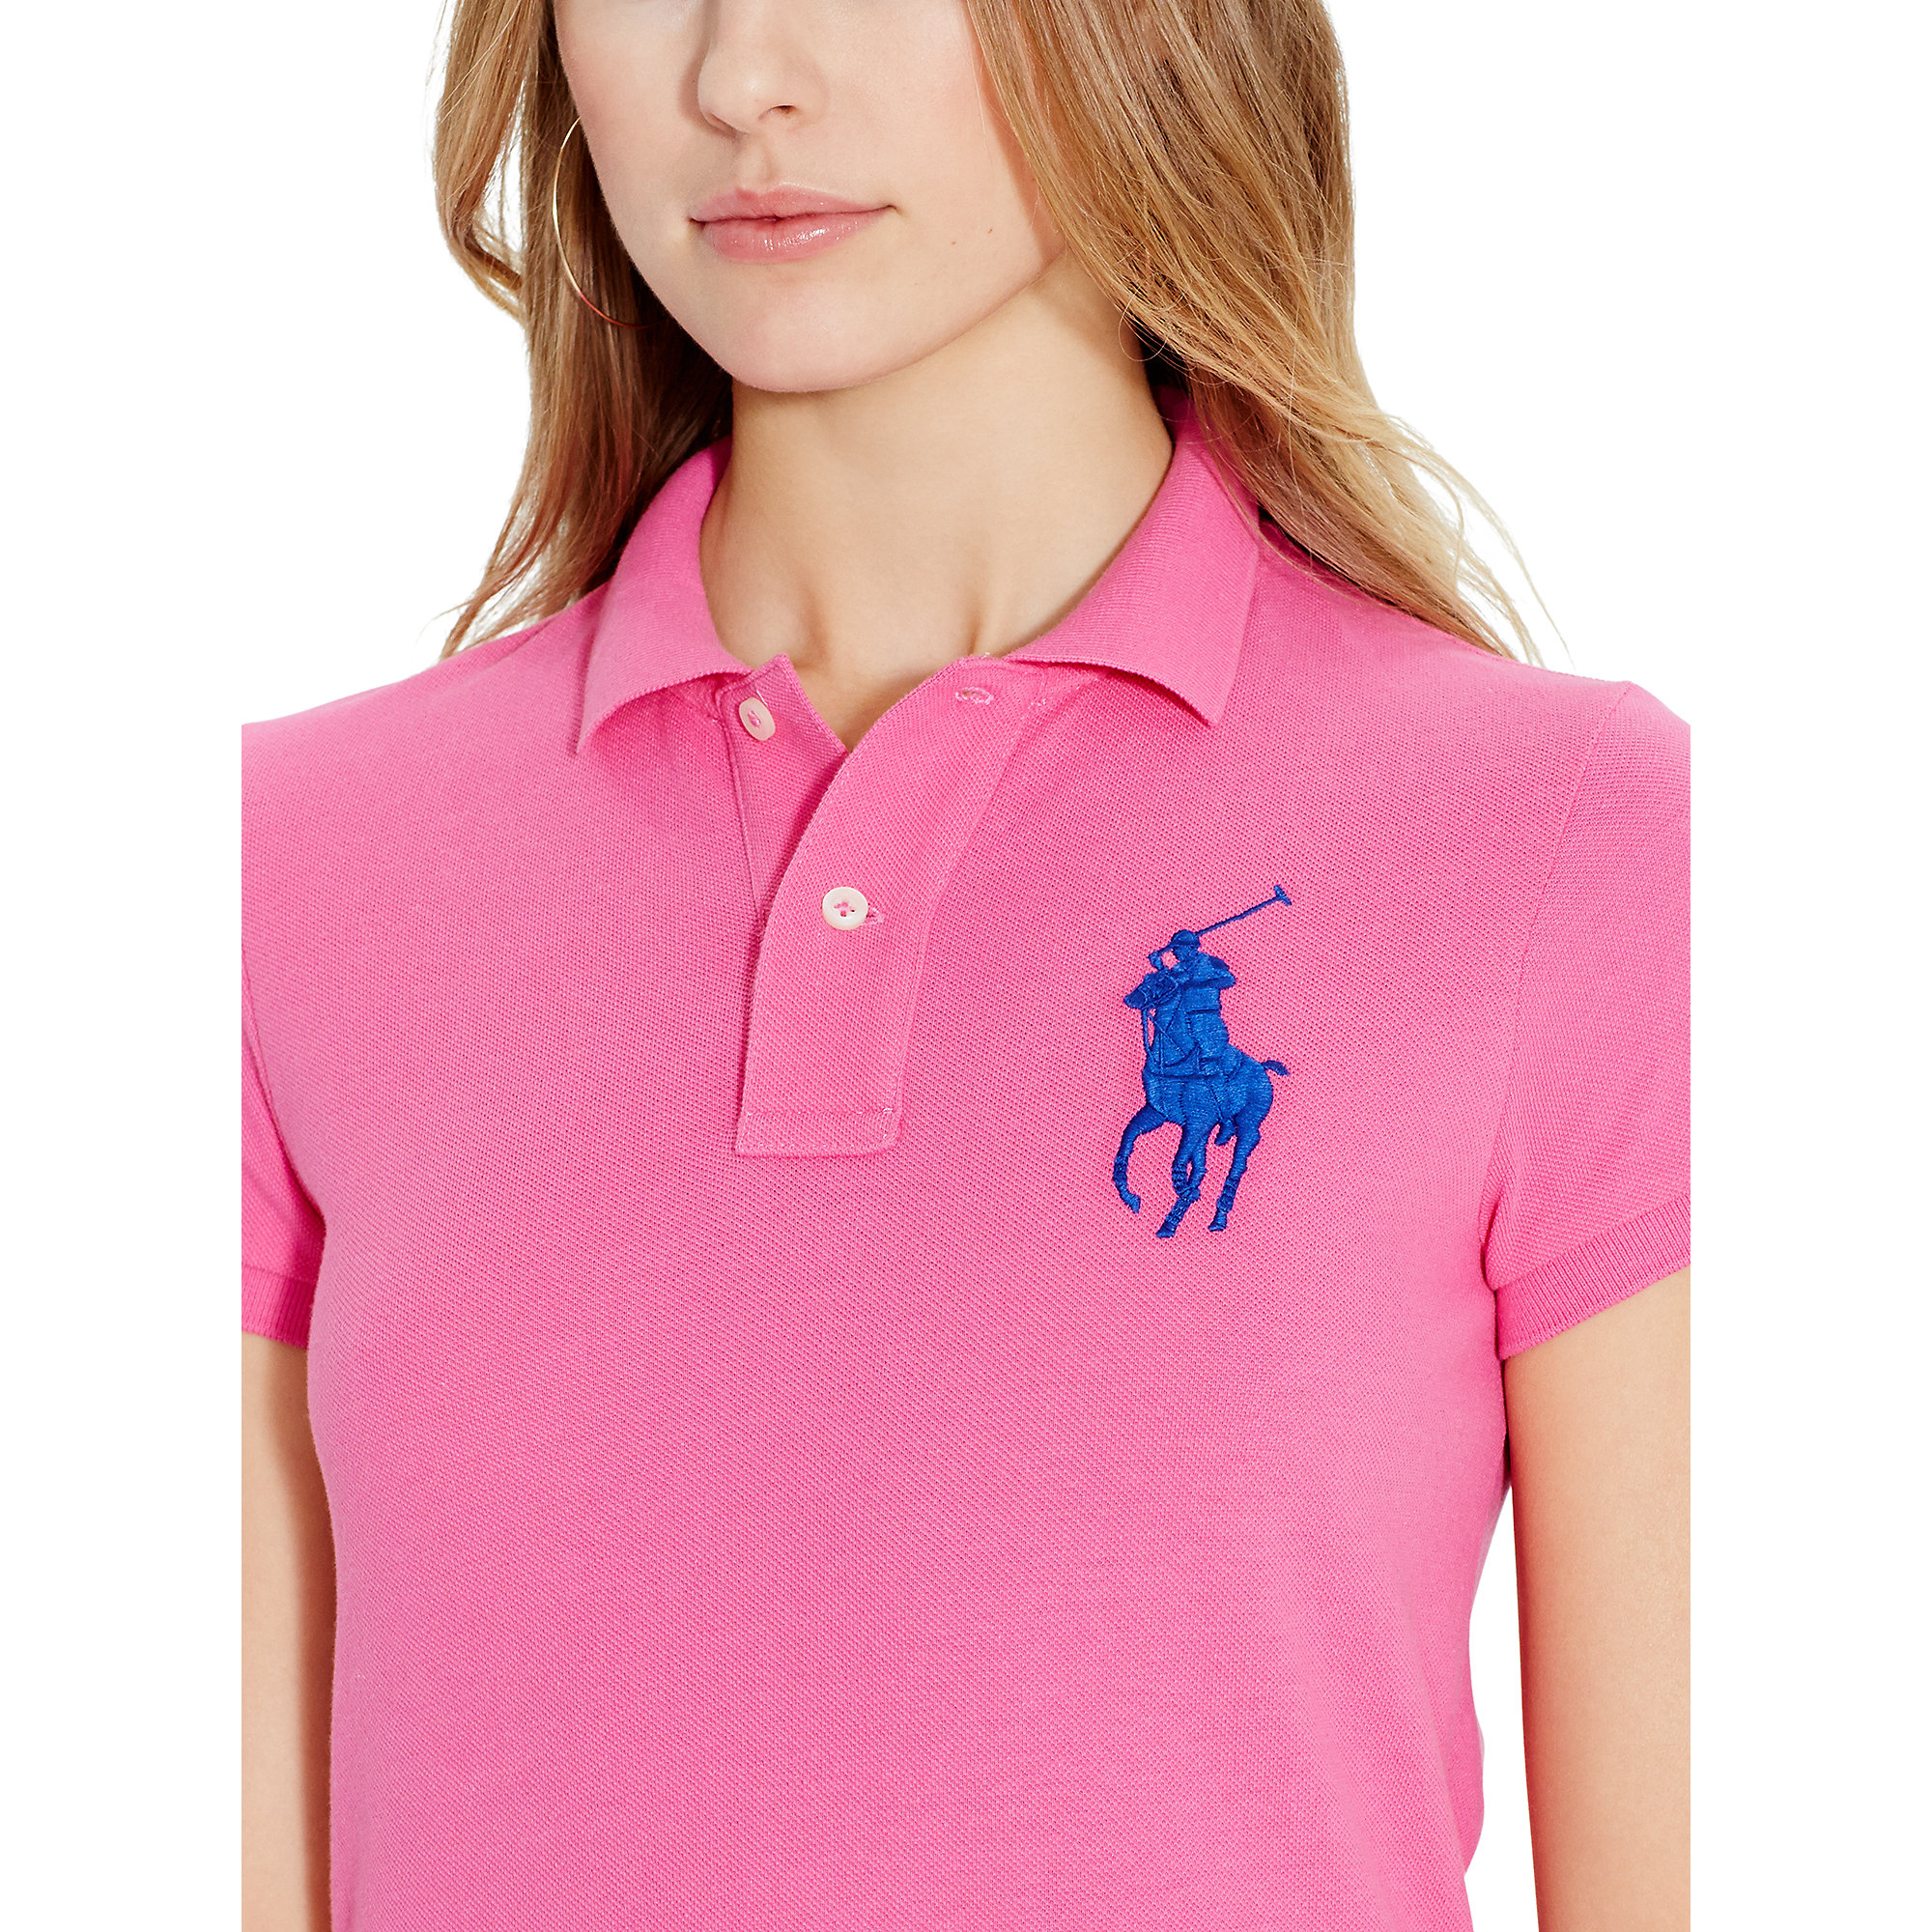 Lyst - Polo Ralph Lauren Big Pony Mini Shirtdress in Pink